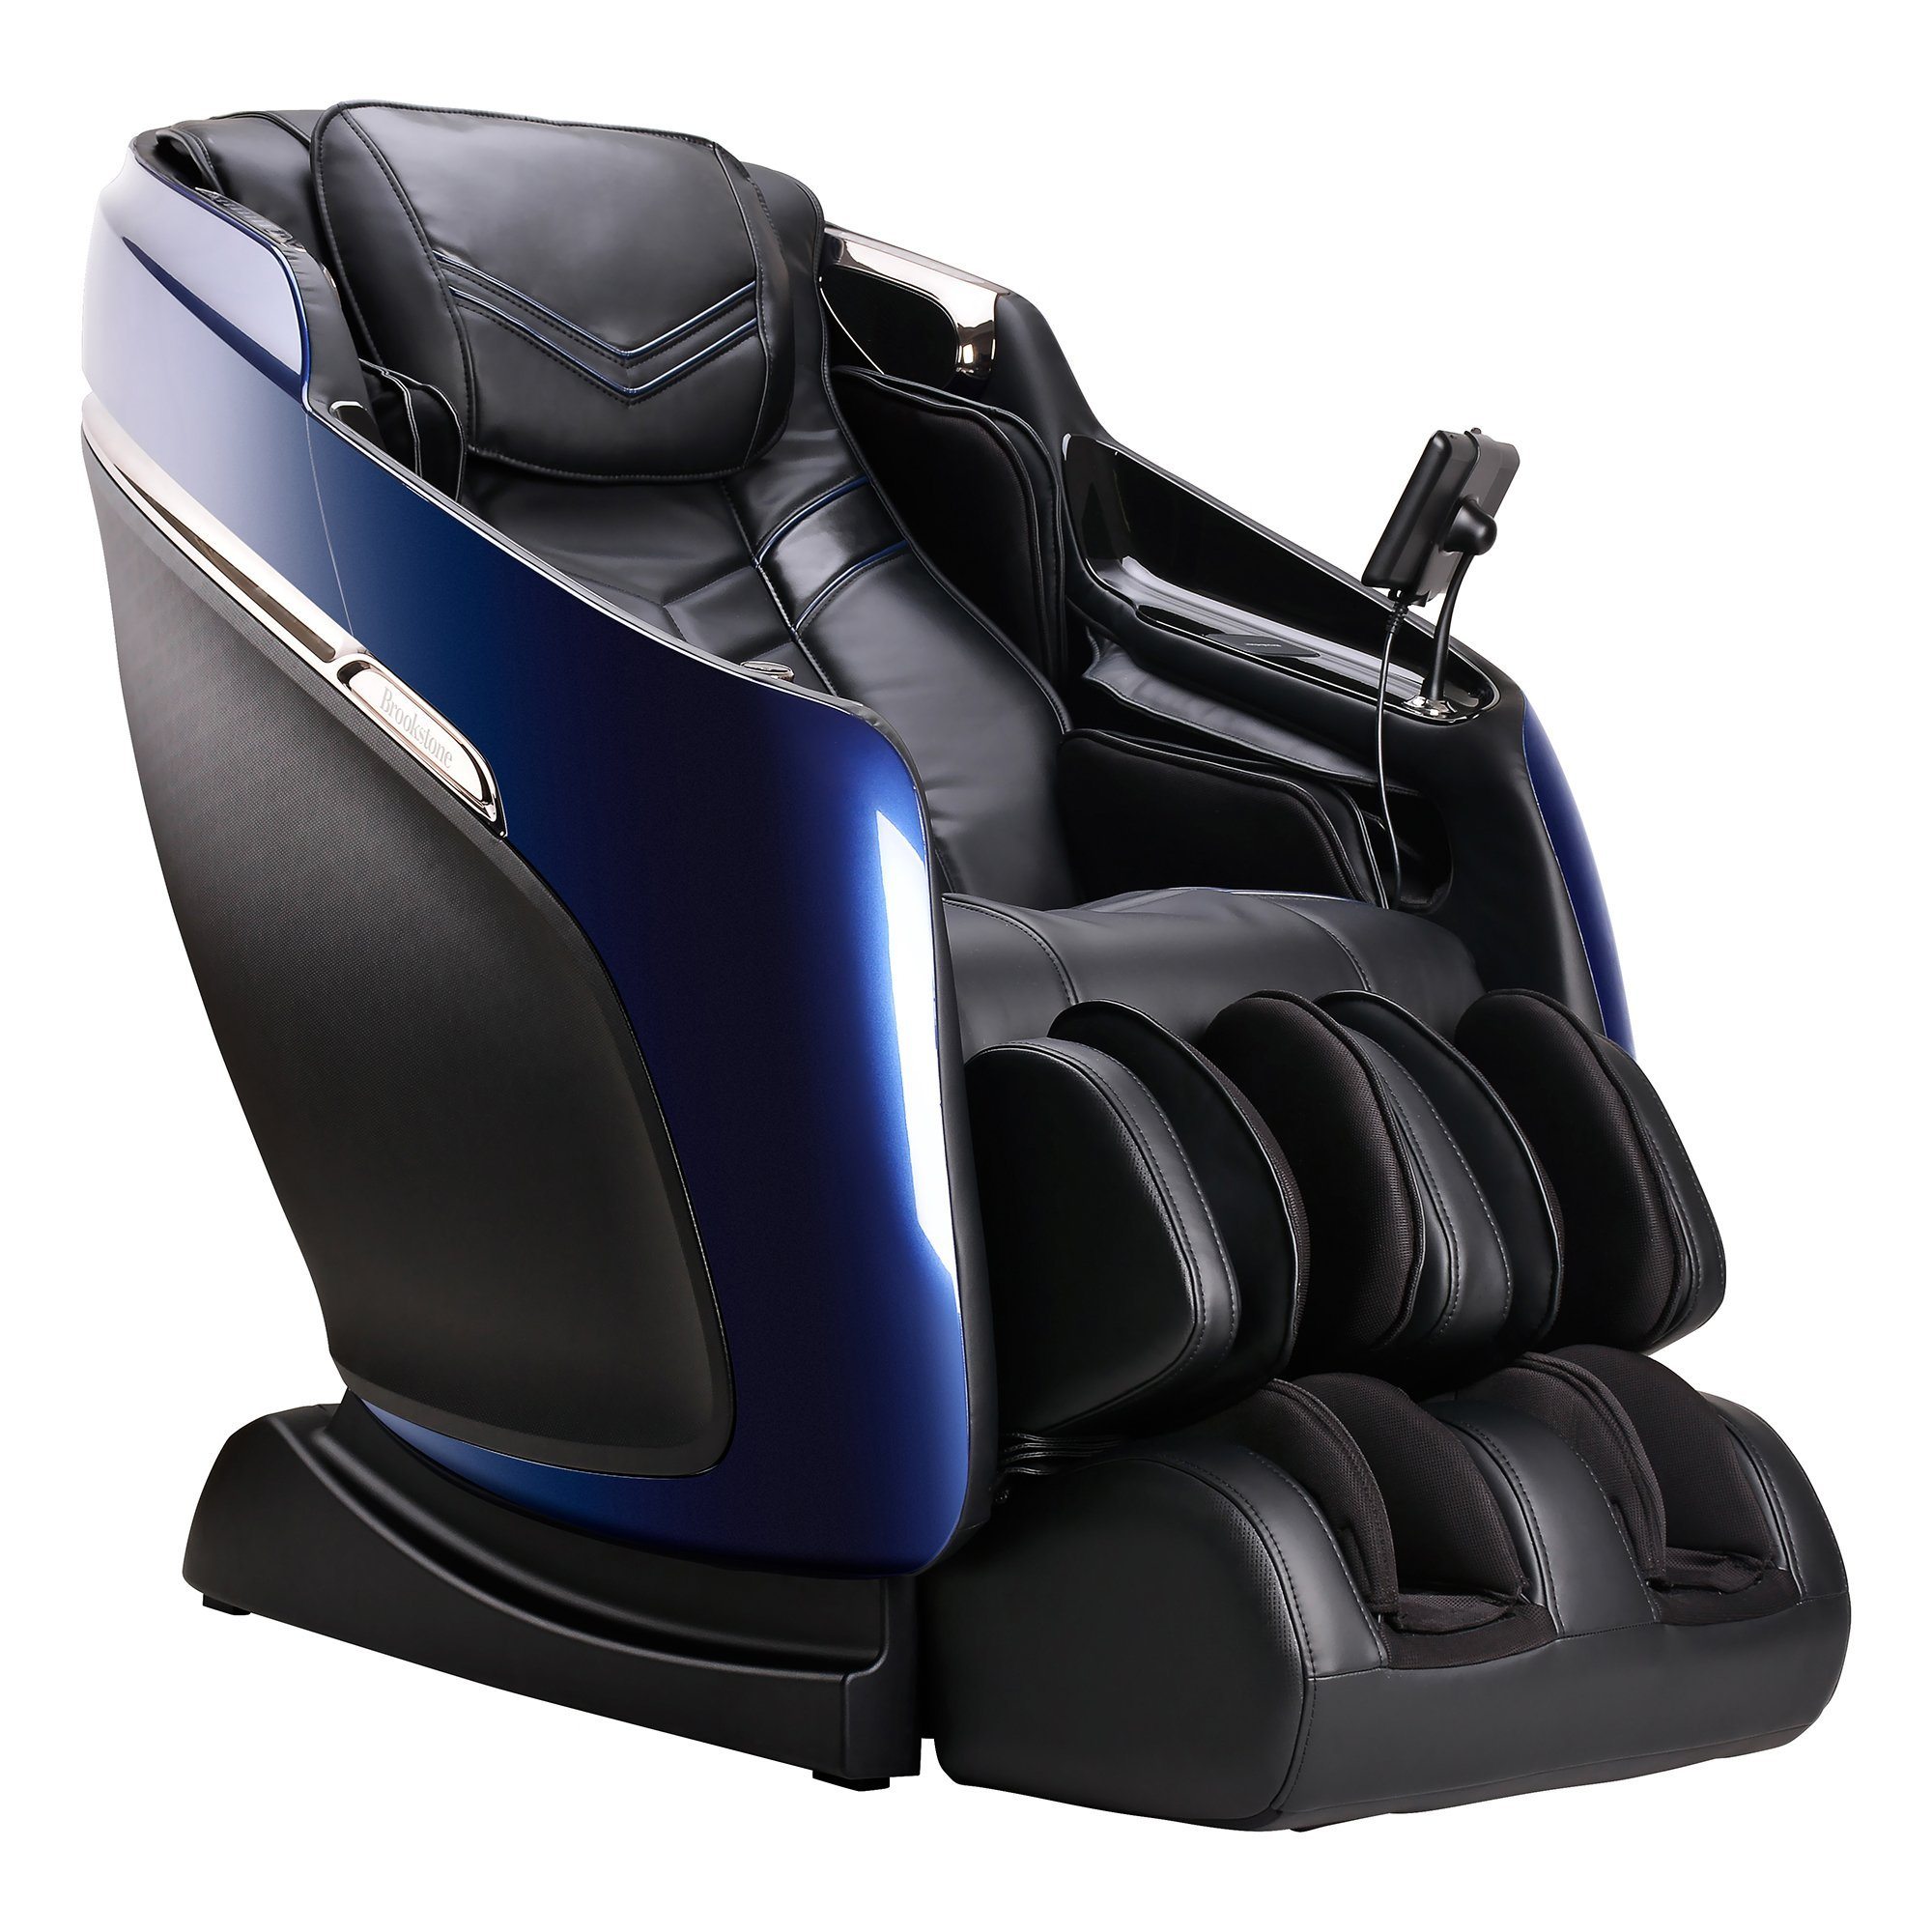 Brookstone Mach Ix Massage Chair Review